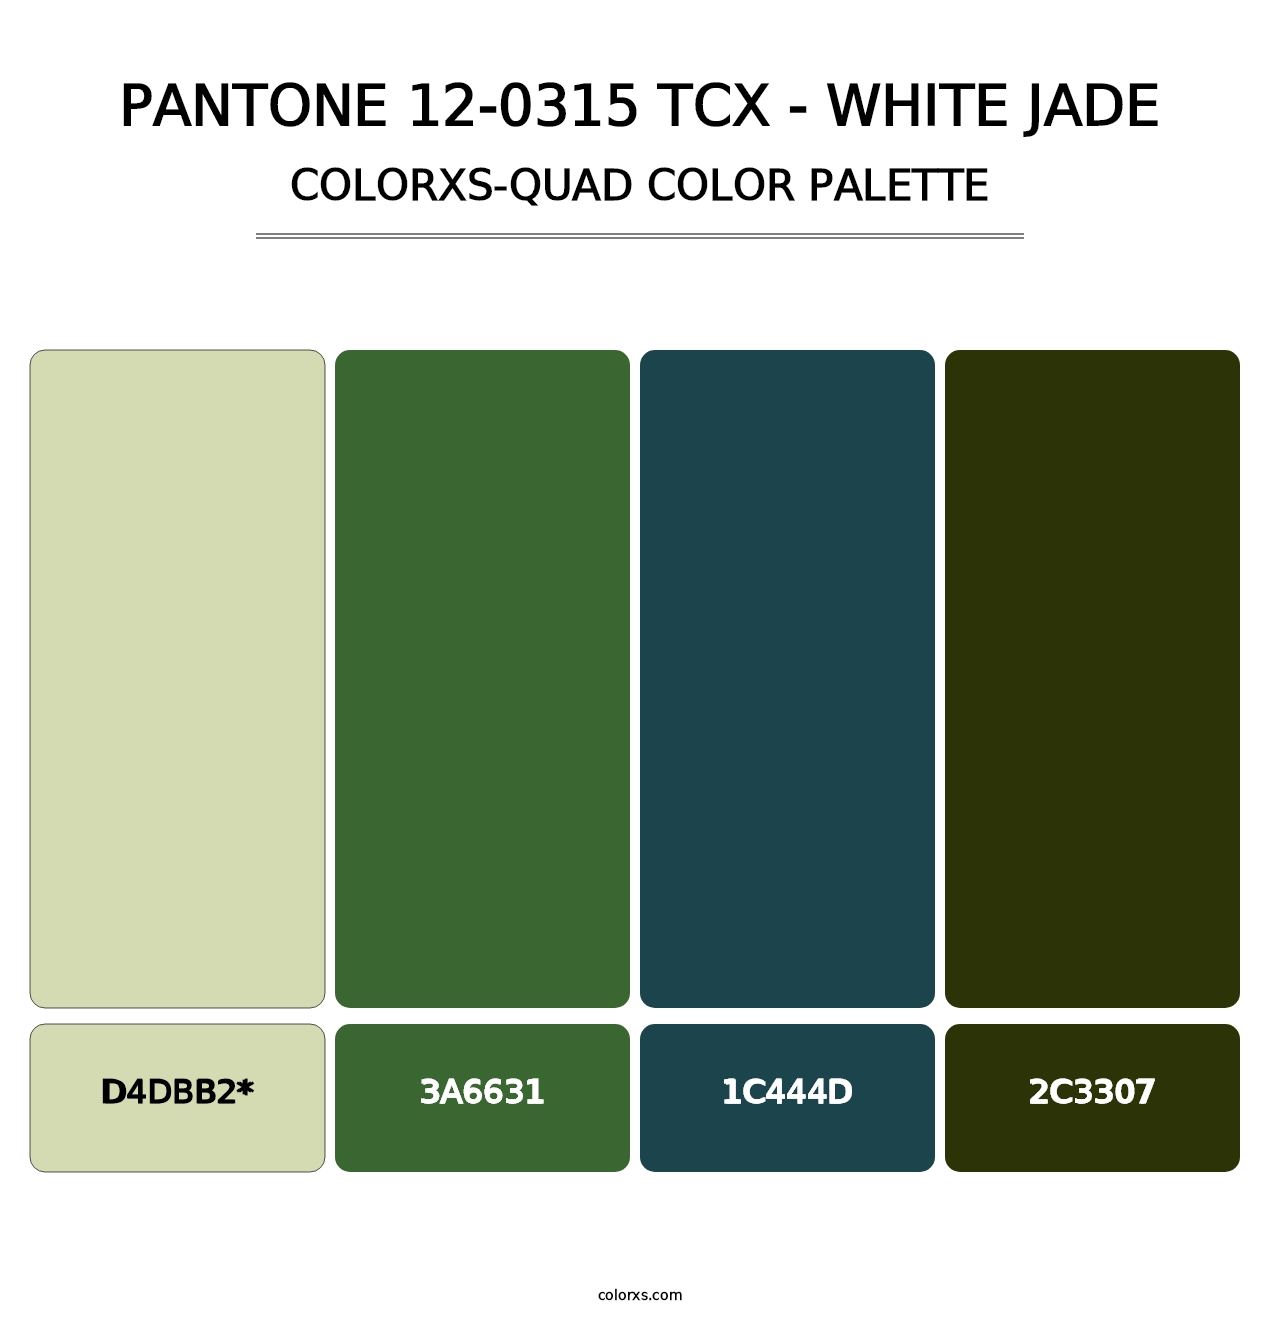 PANTONE 12-0315 TCX - White Jade - Colorxs Quad Palette